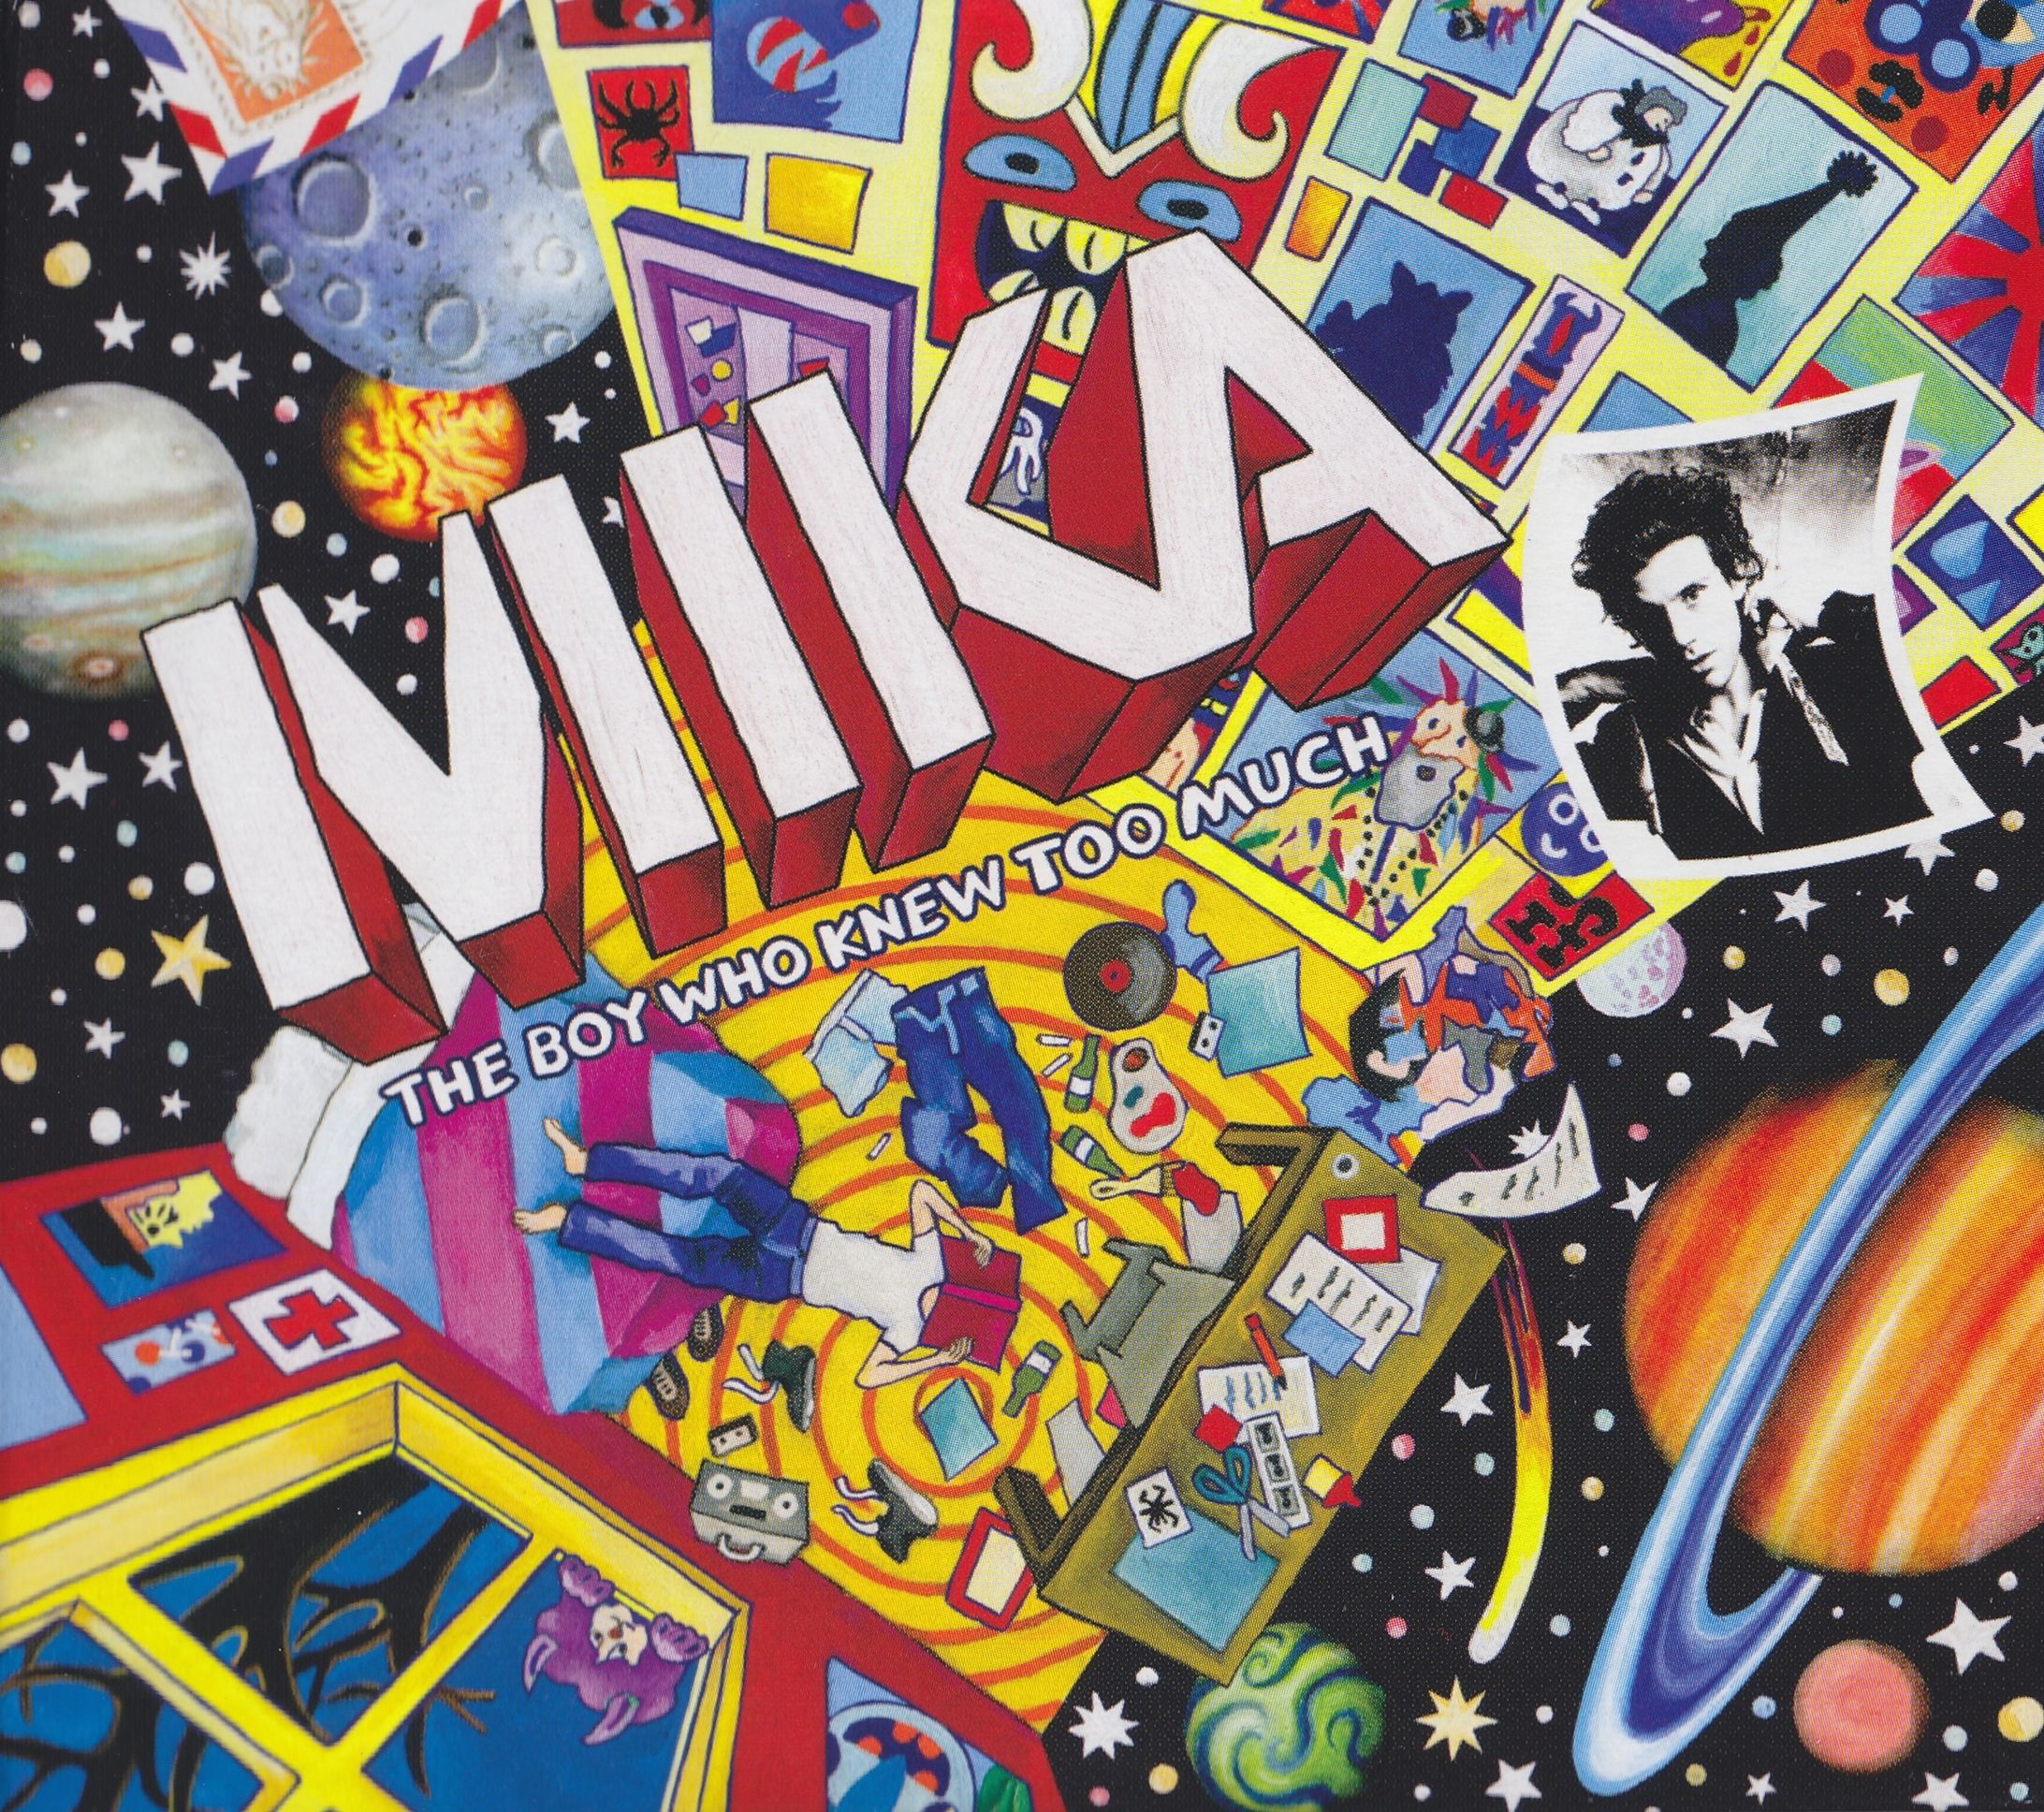 Super Partituras - Love Today (Mika), com cifra